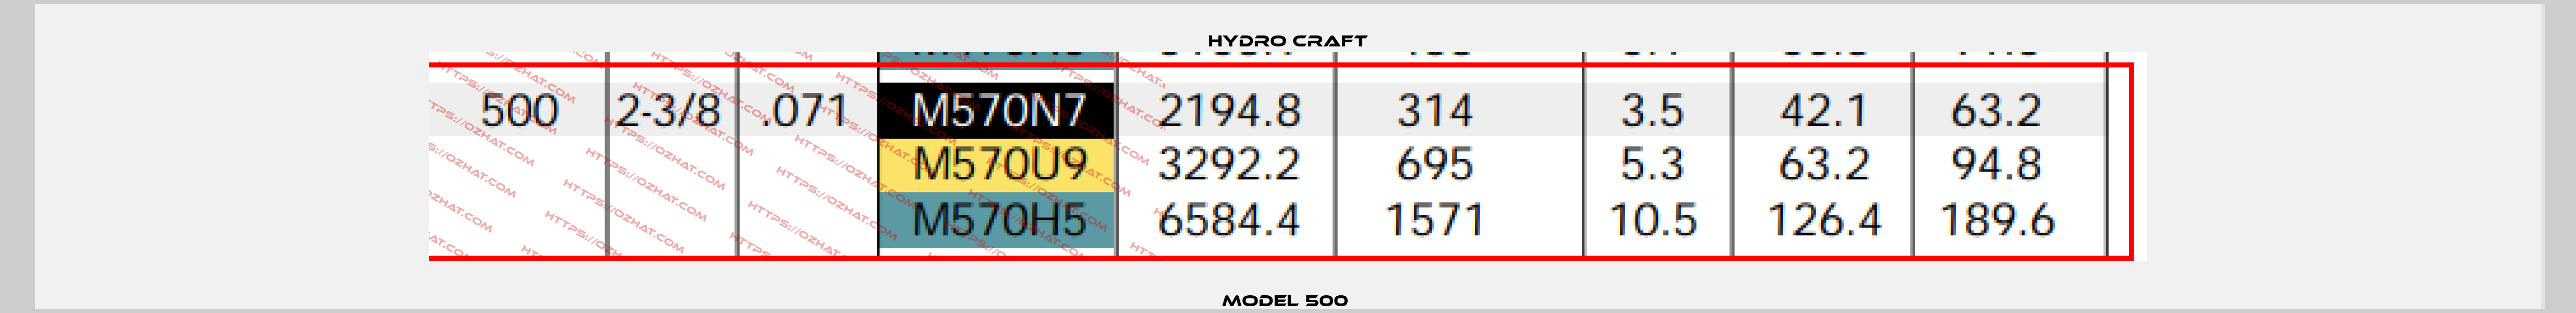 Model 500  Hydro Craft